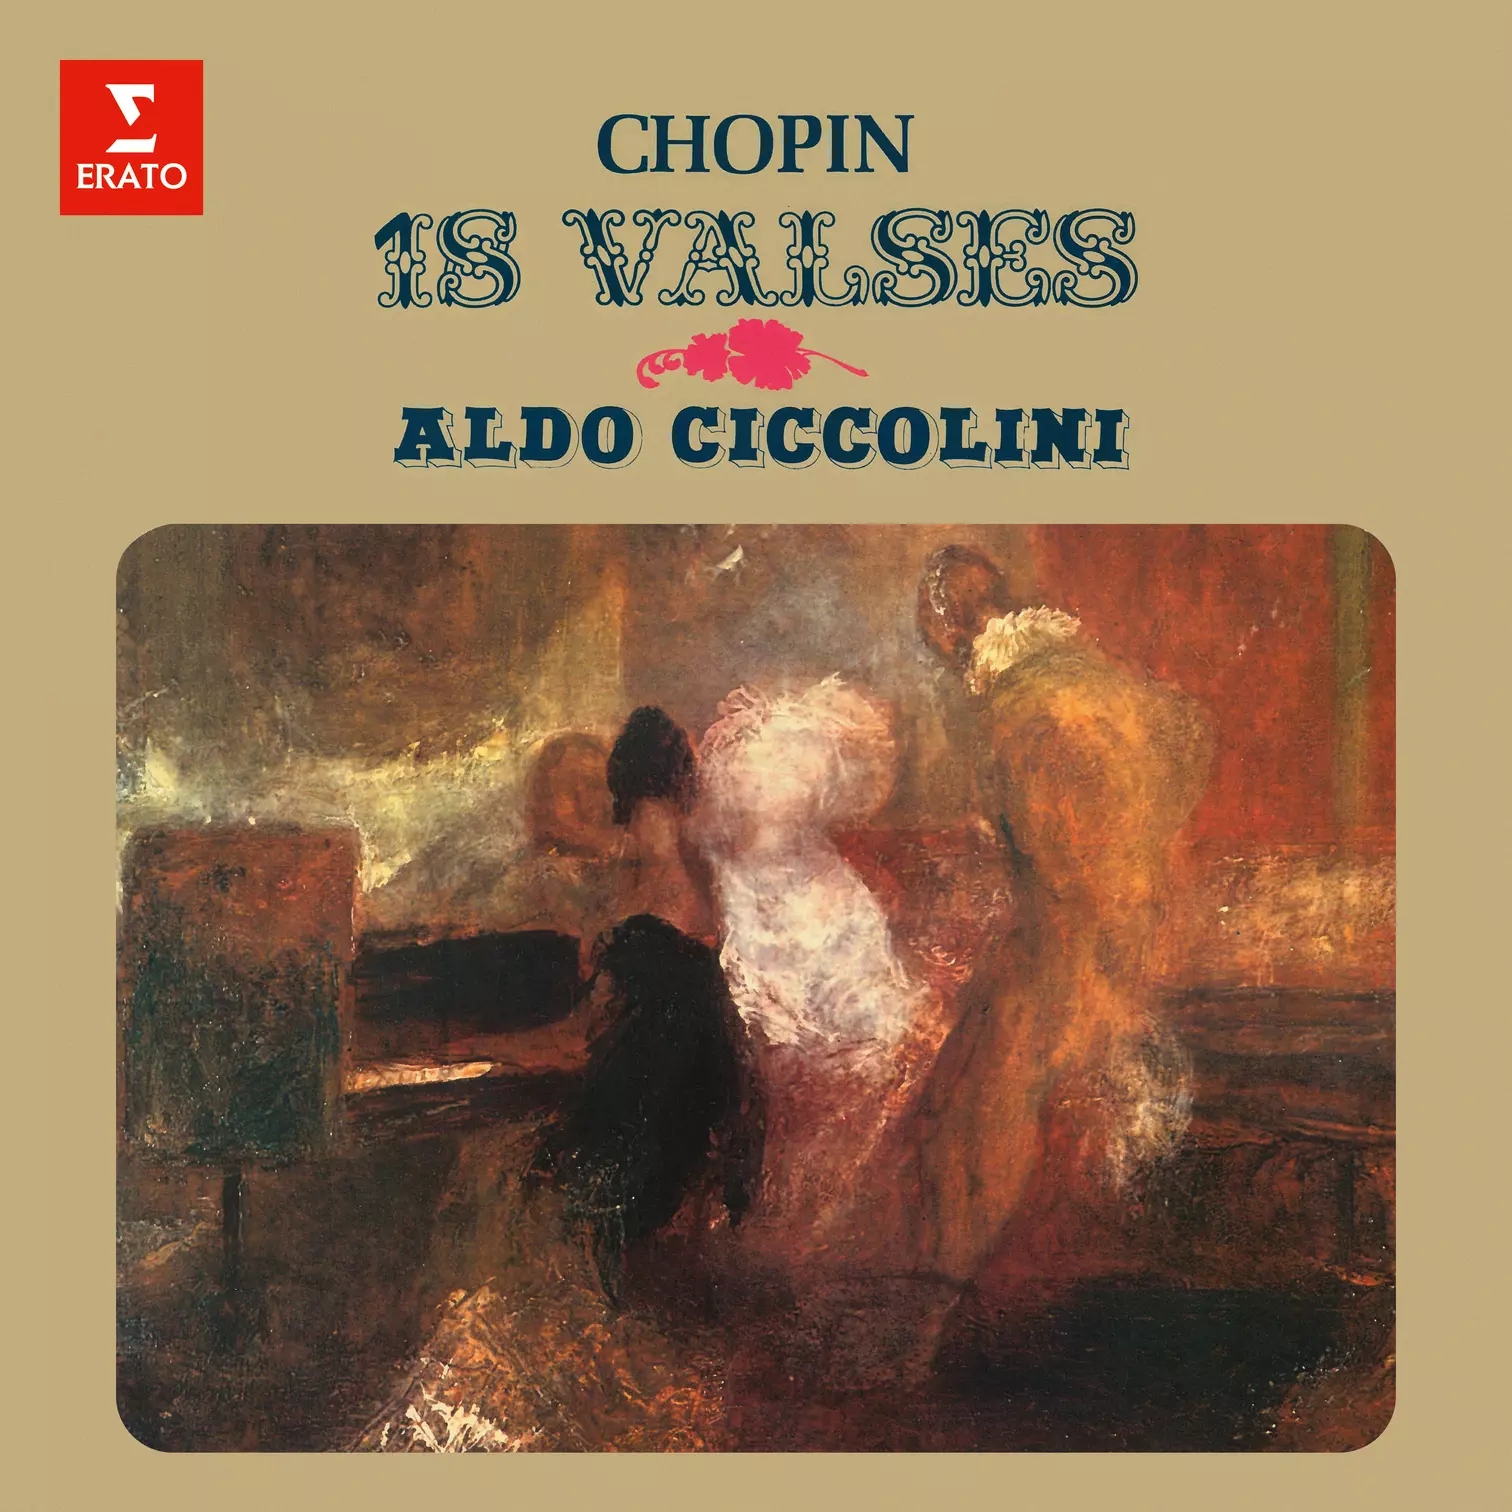 Chopin: 18 Valses